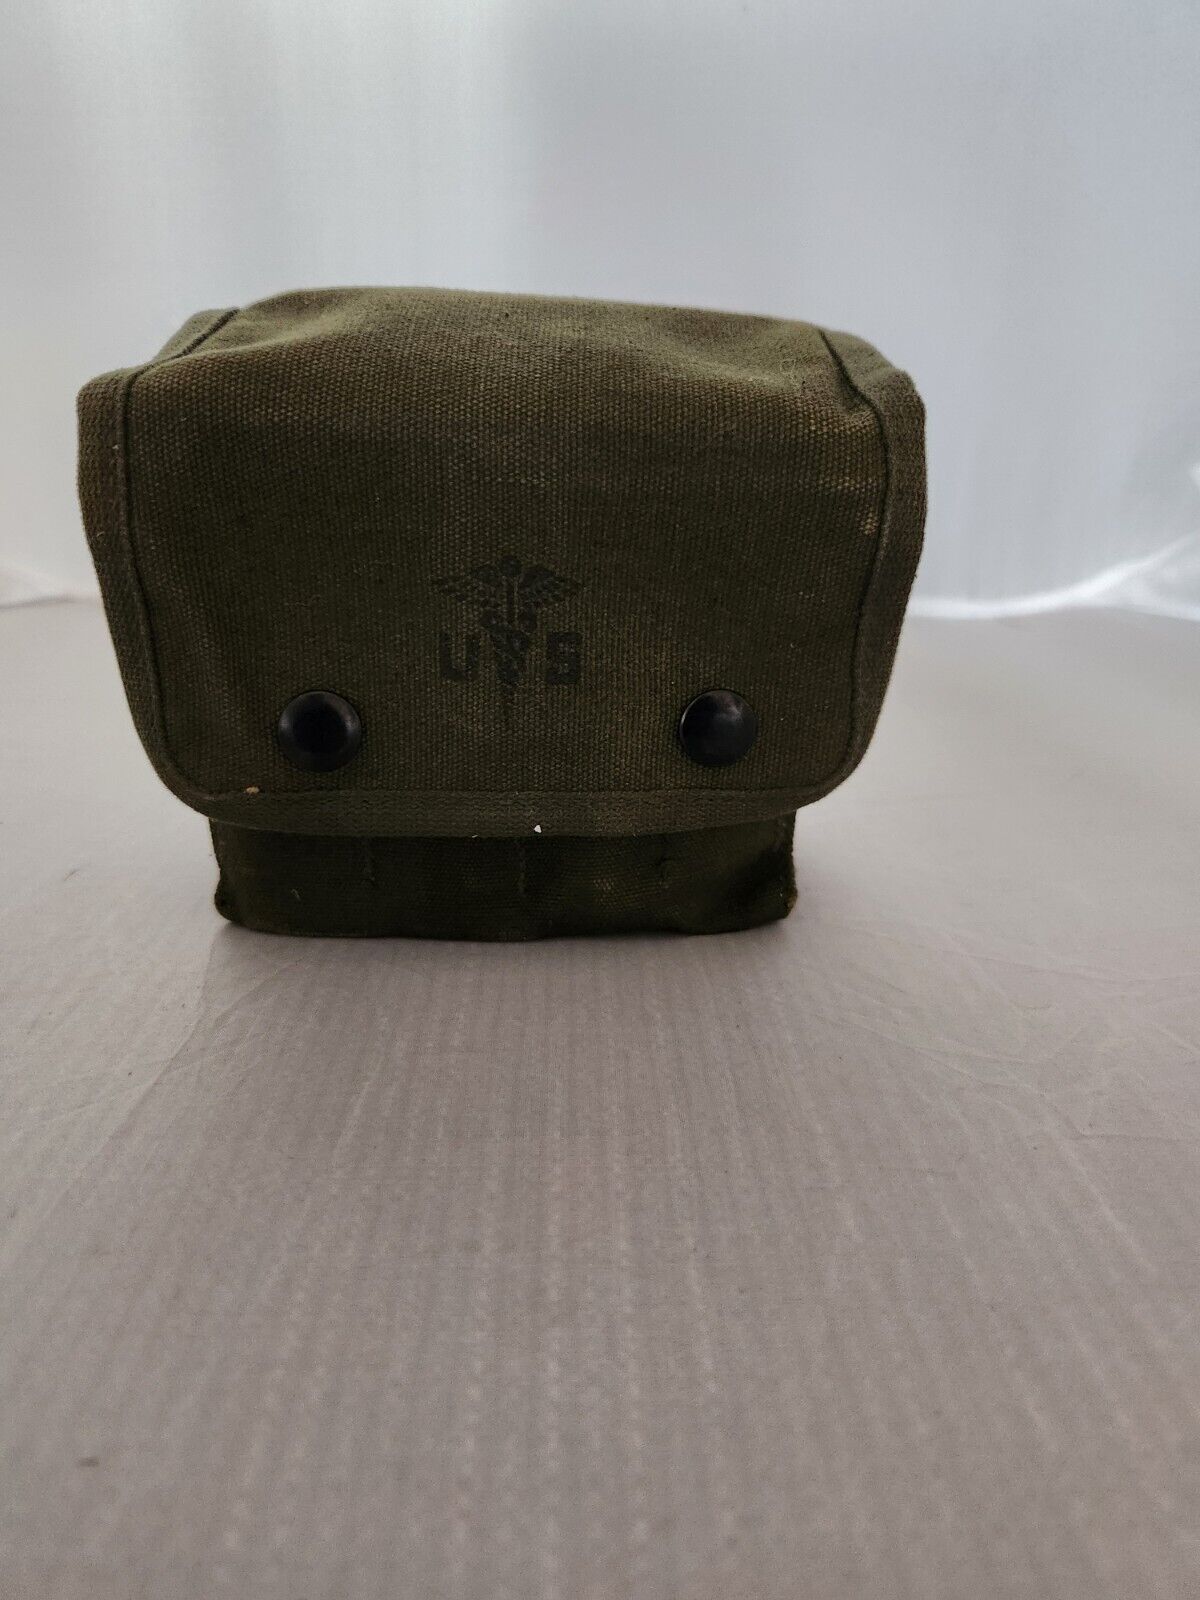 Vintage Military First Aid Kit